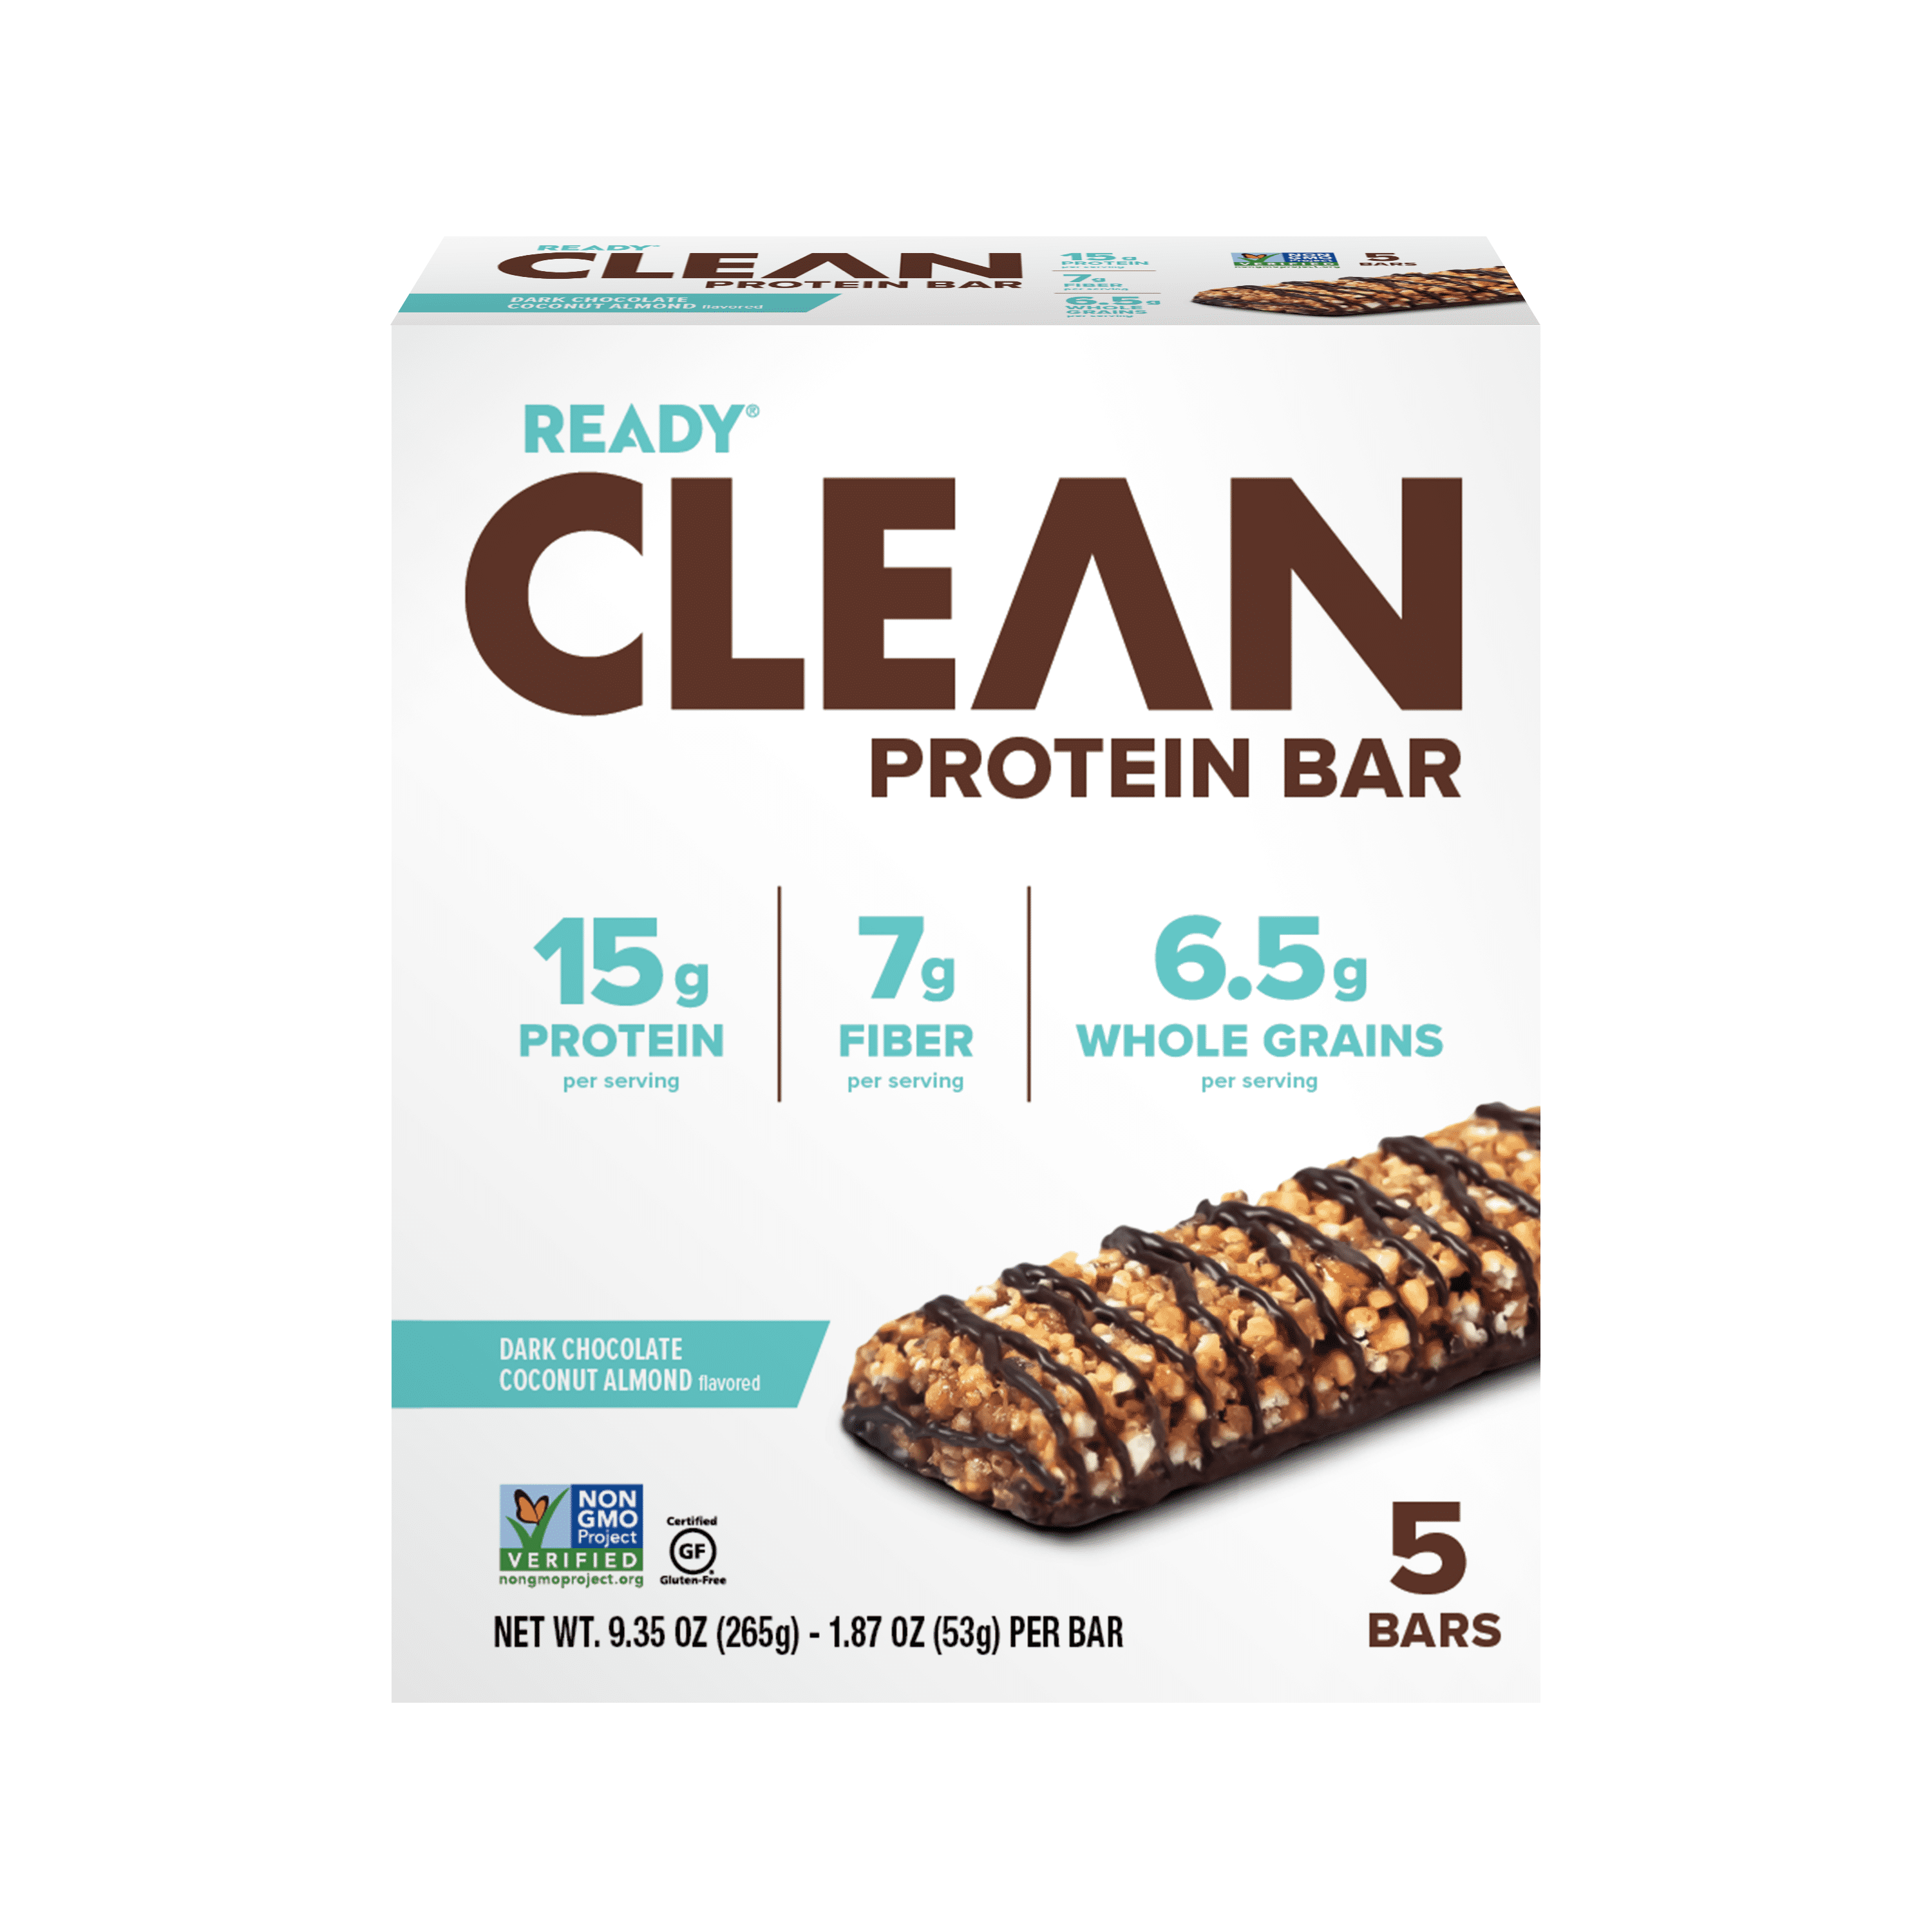 Ready Clean Protein Bar, Dark Chocolate & Coconut Almond, 5 Count Bars